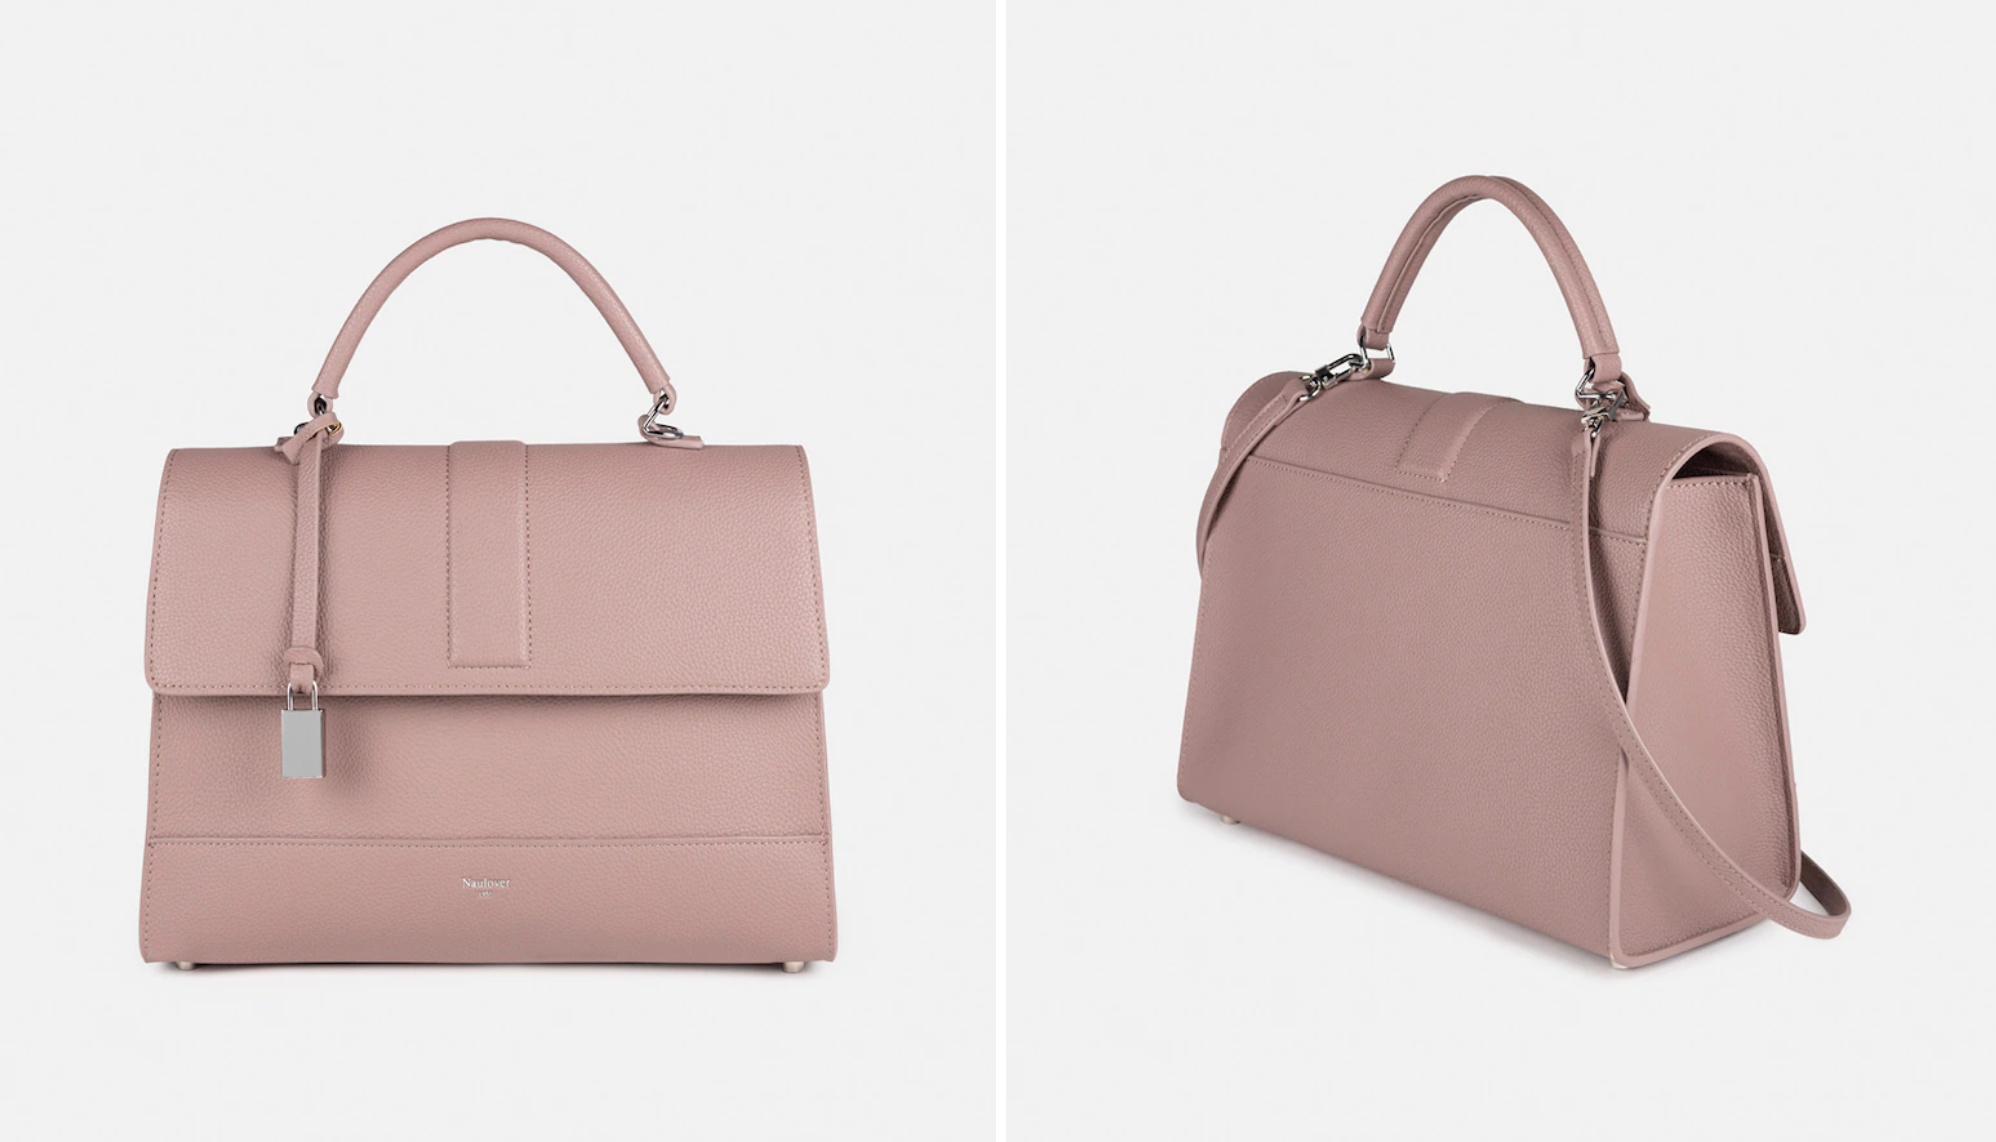 Medium pink handbag with flap